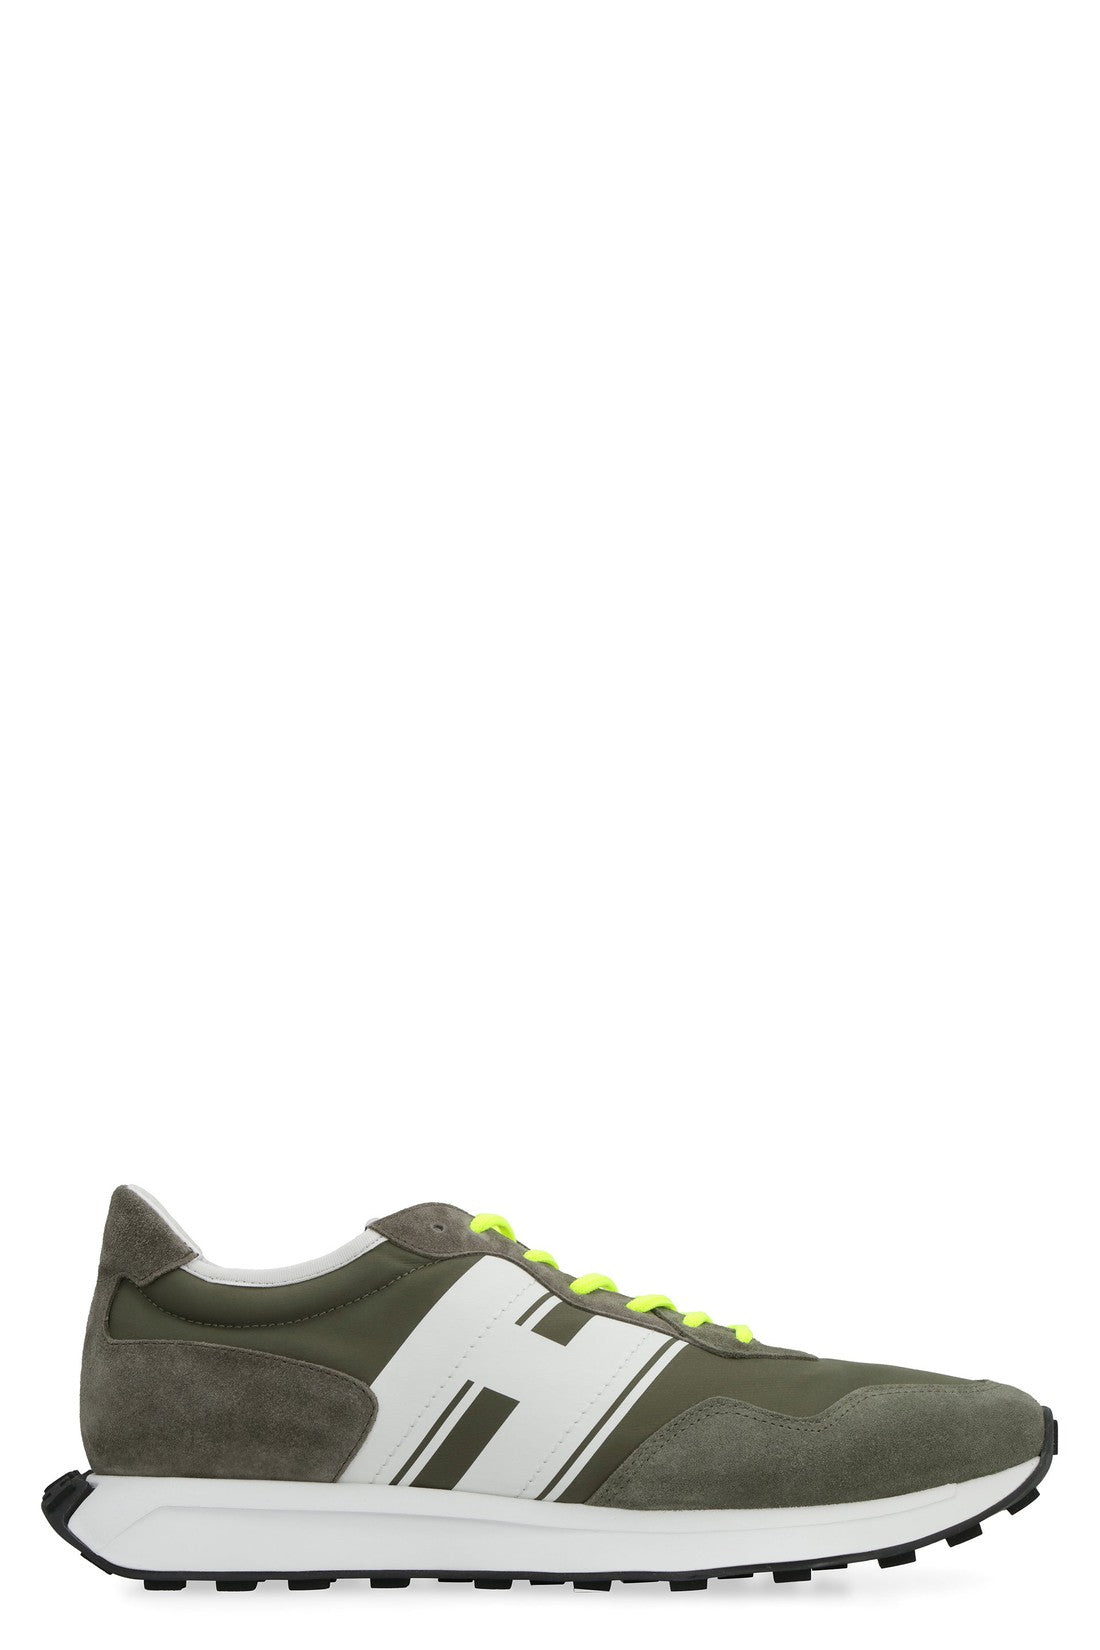 Hogan-OUTLET-SALE-H601 leather sneakers-ARCHIVIST